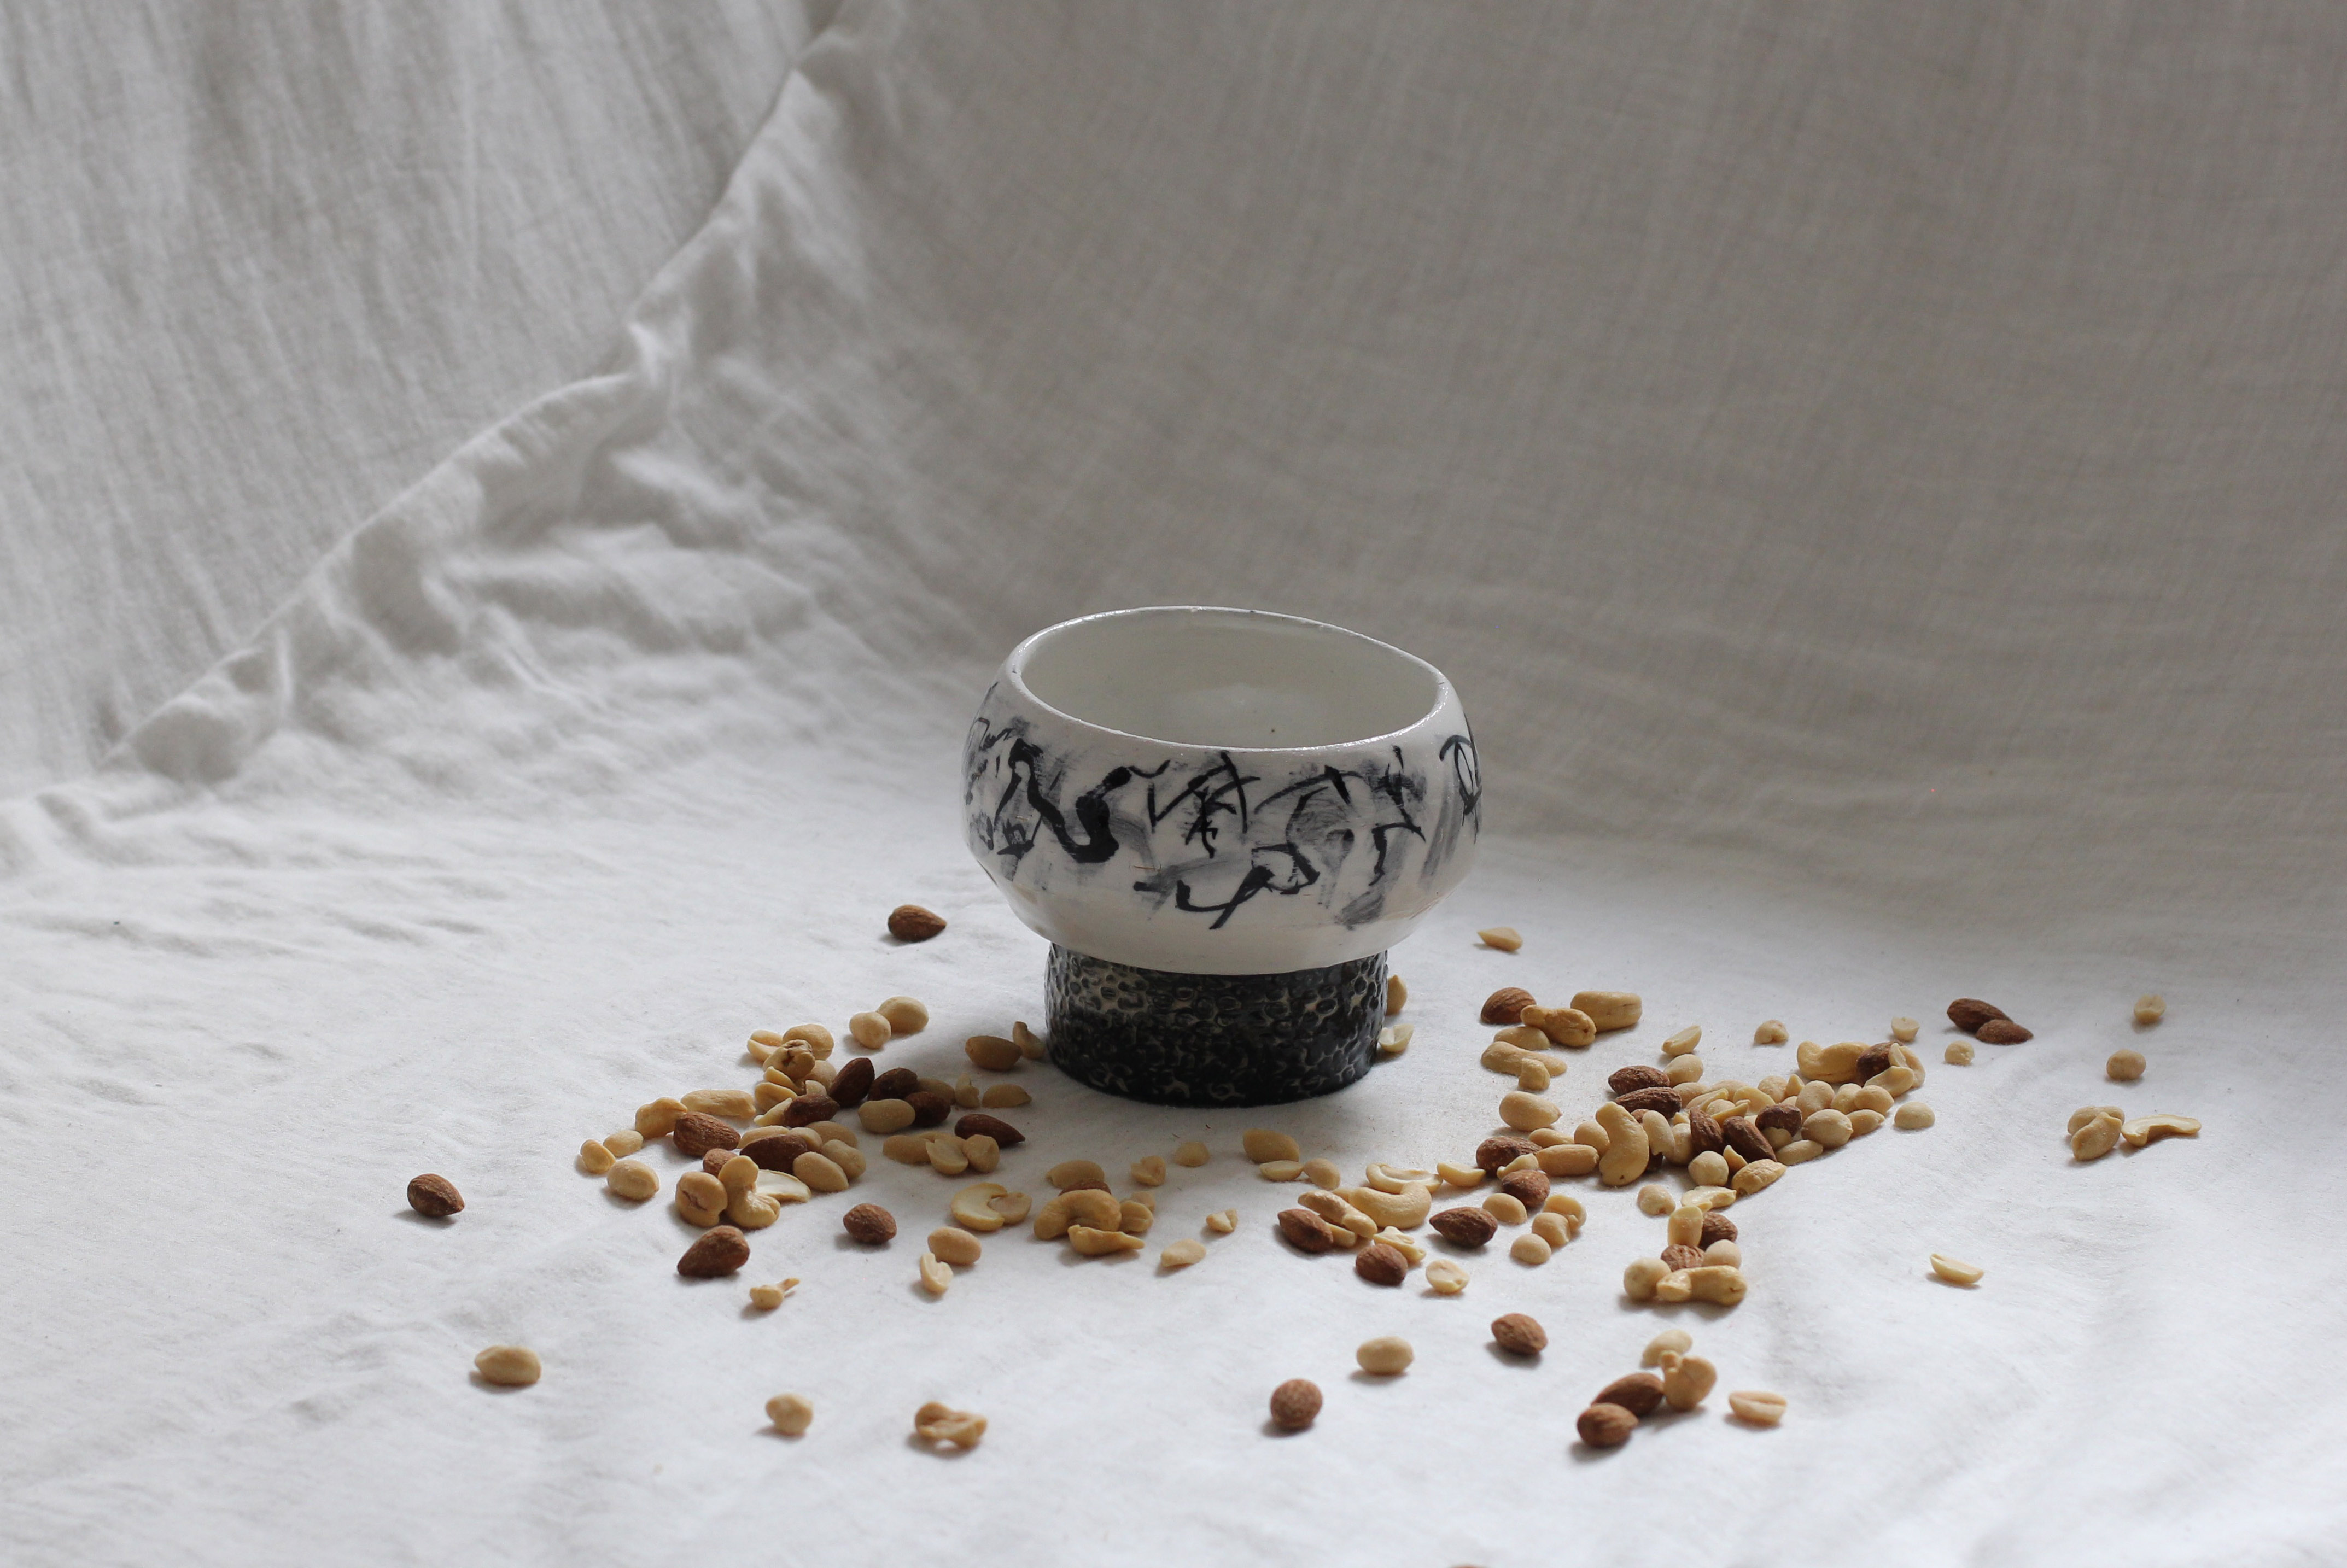 Two bowls in one  by Daniela Franz - Creative Work